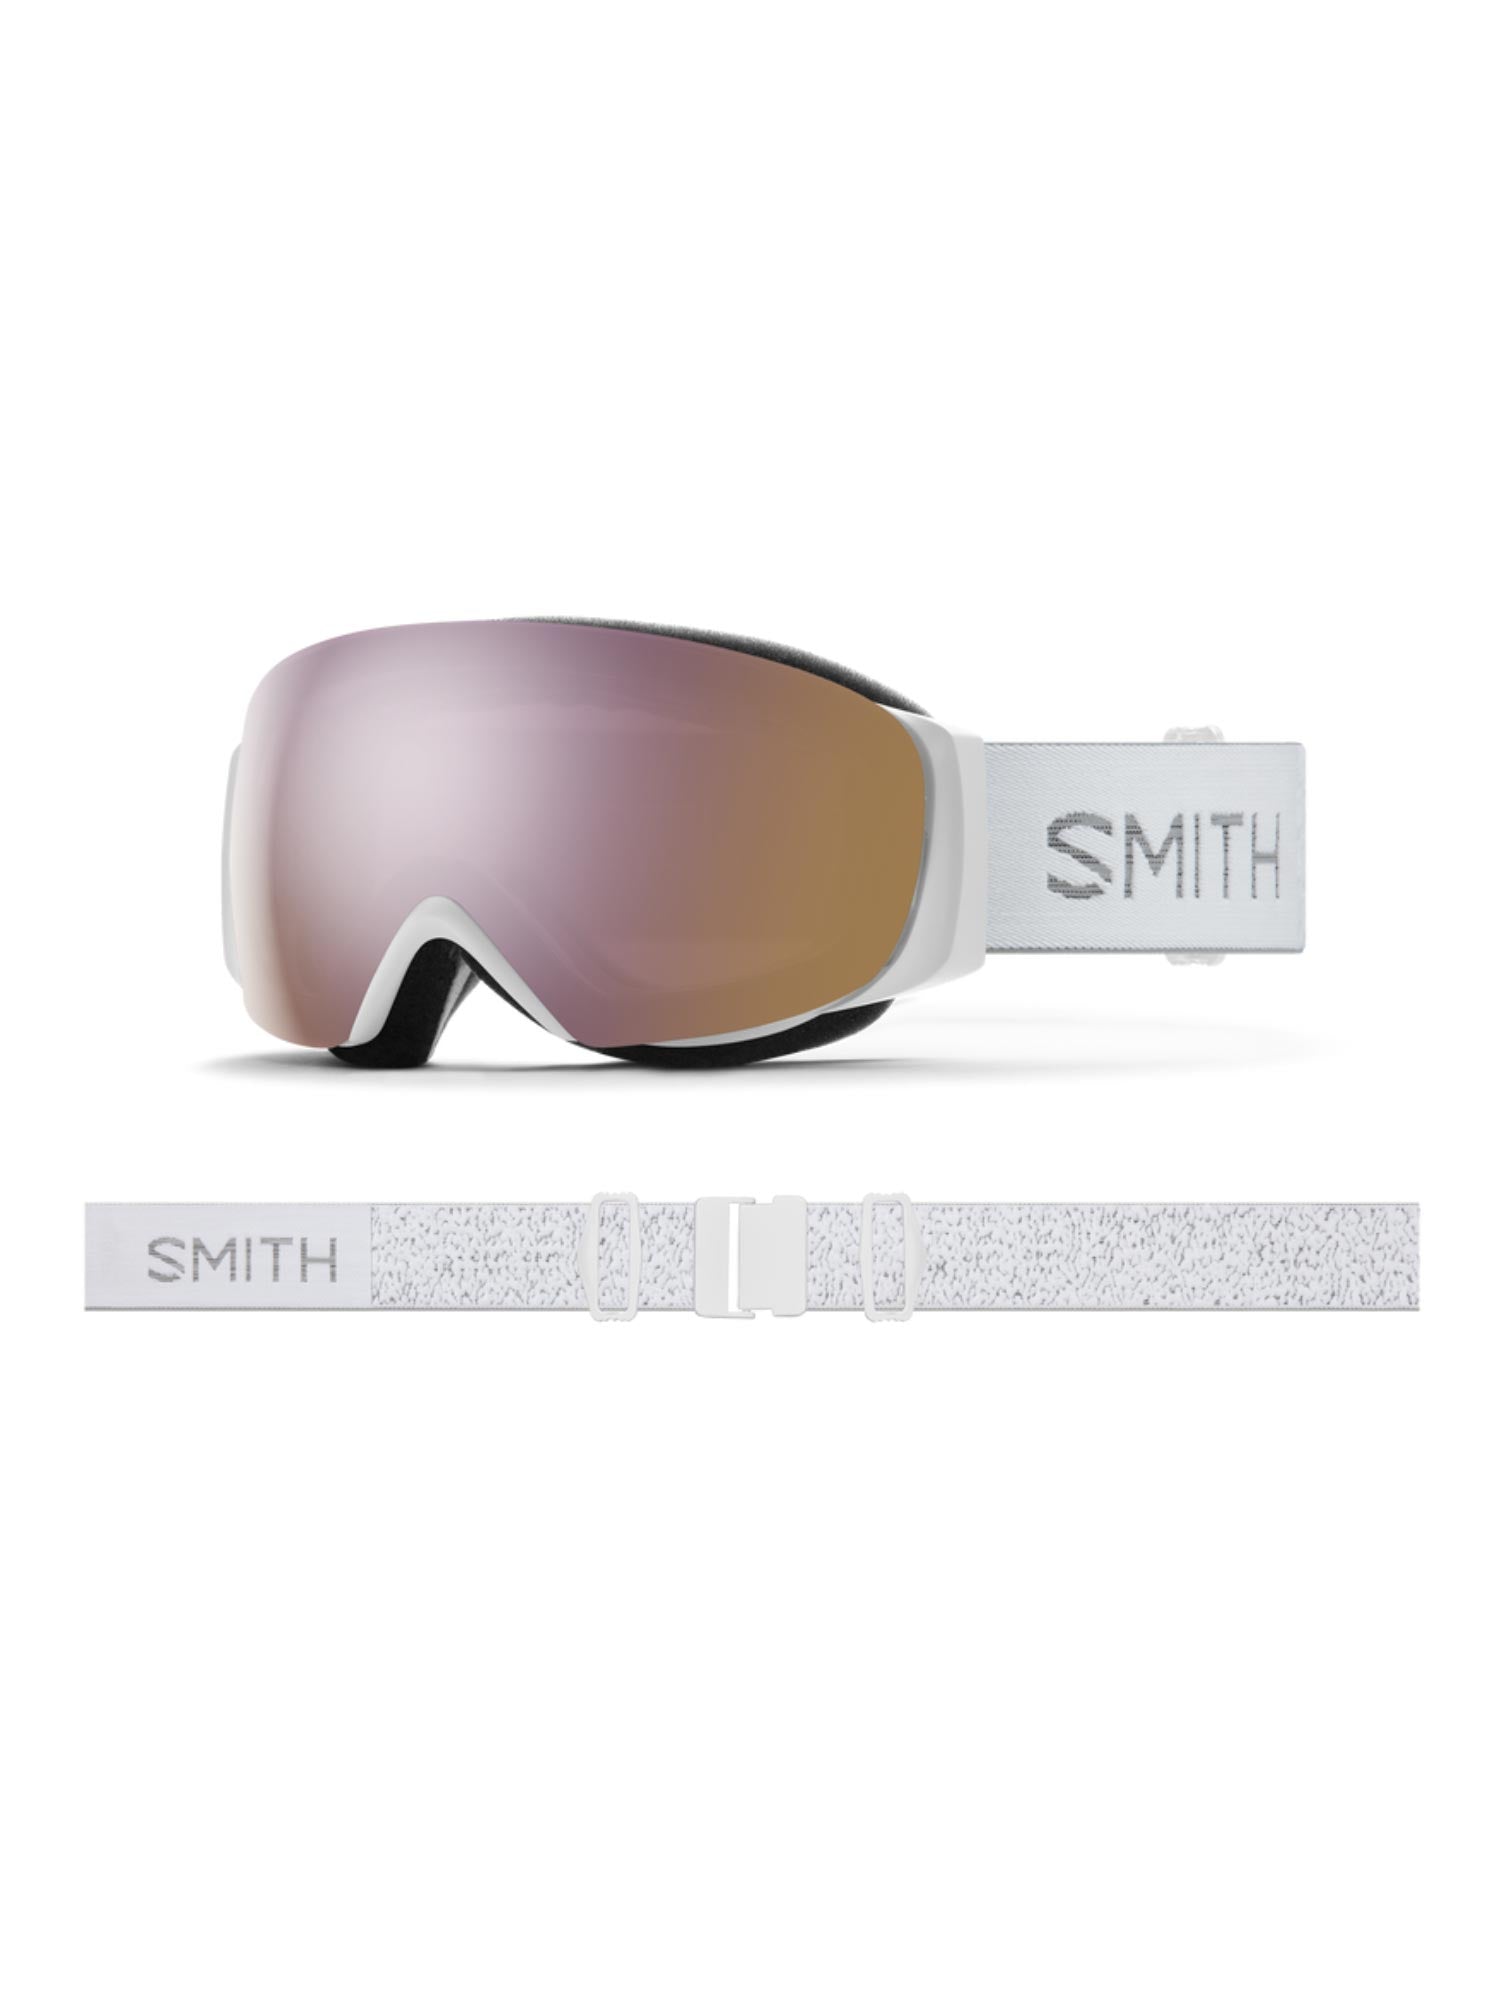 Smith ski goggles, white strap and rose gold lens